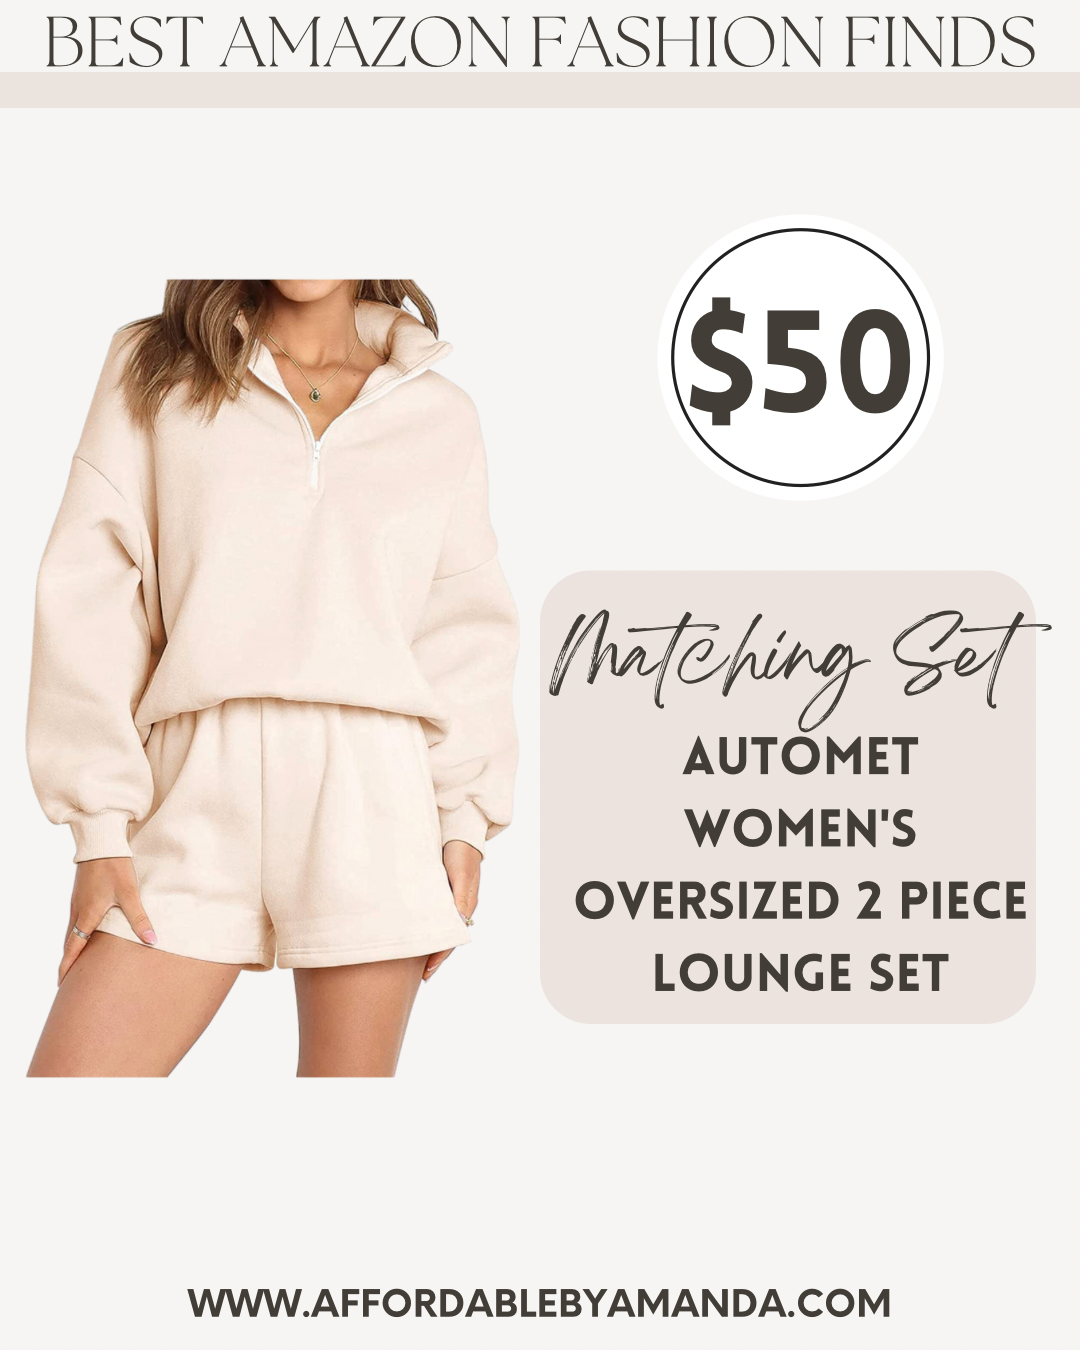 AUTOMET Women's Oversized 2 Piece Lounge Set - Affordable by Amanda